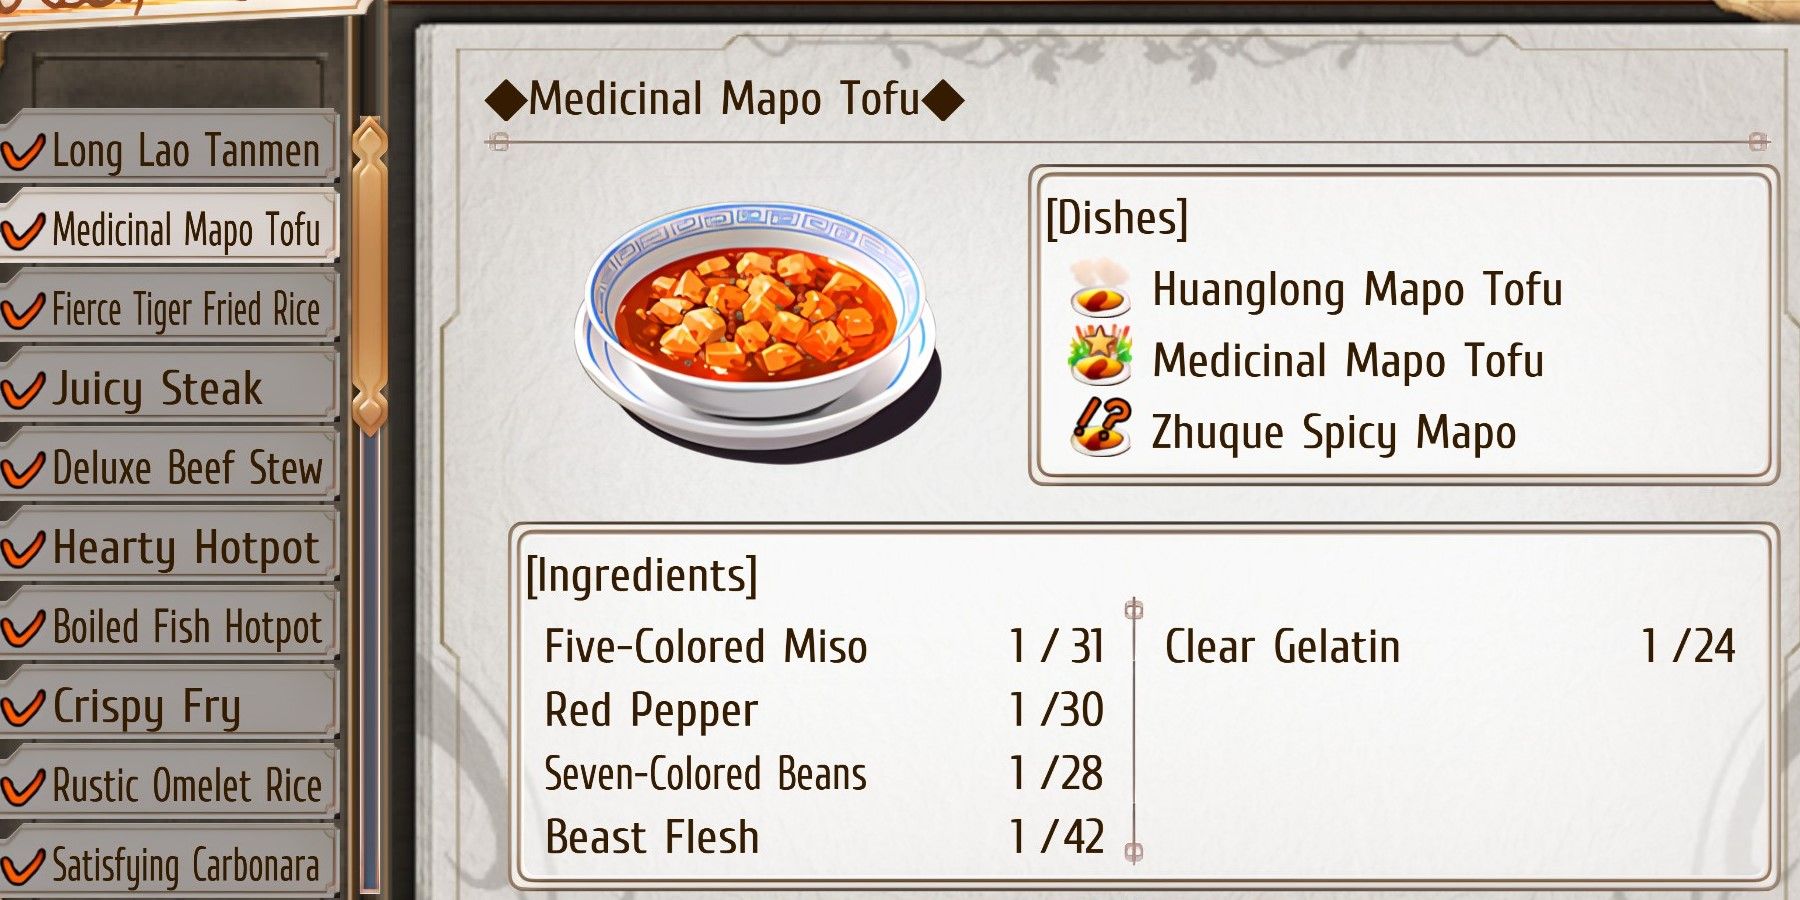 Medicinal Mapo Tofu recipe and ingredient list